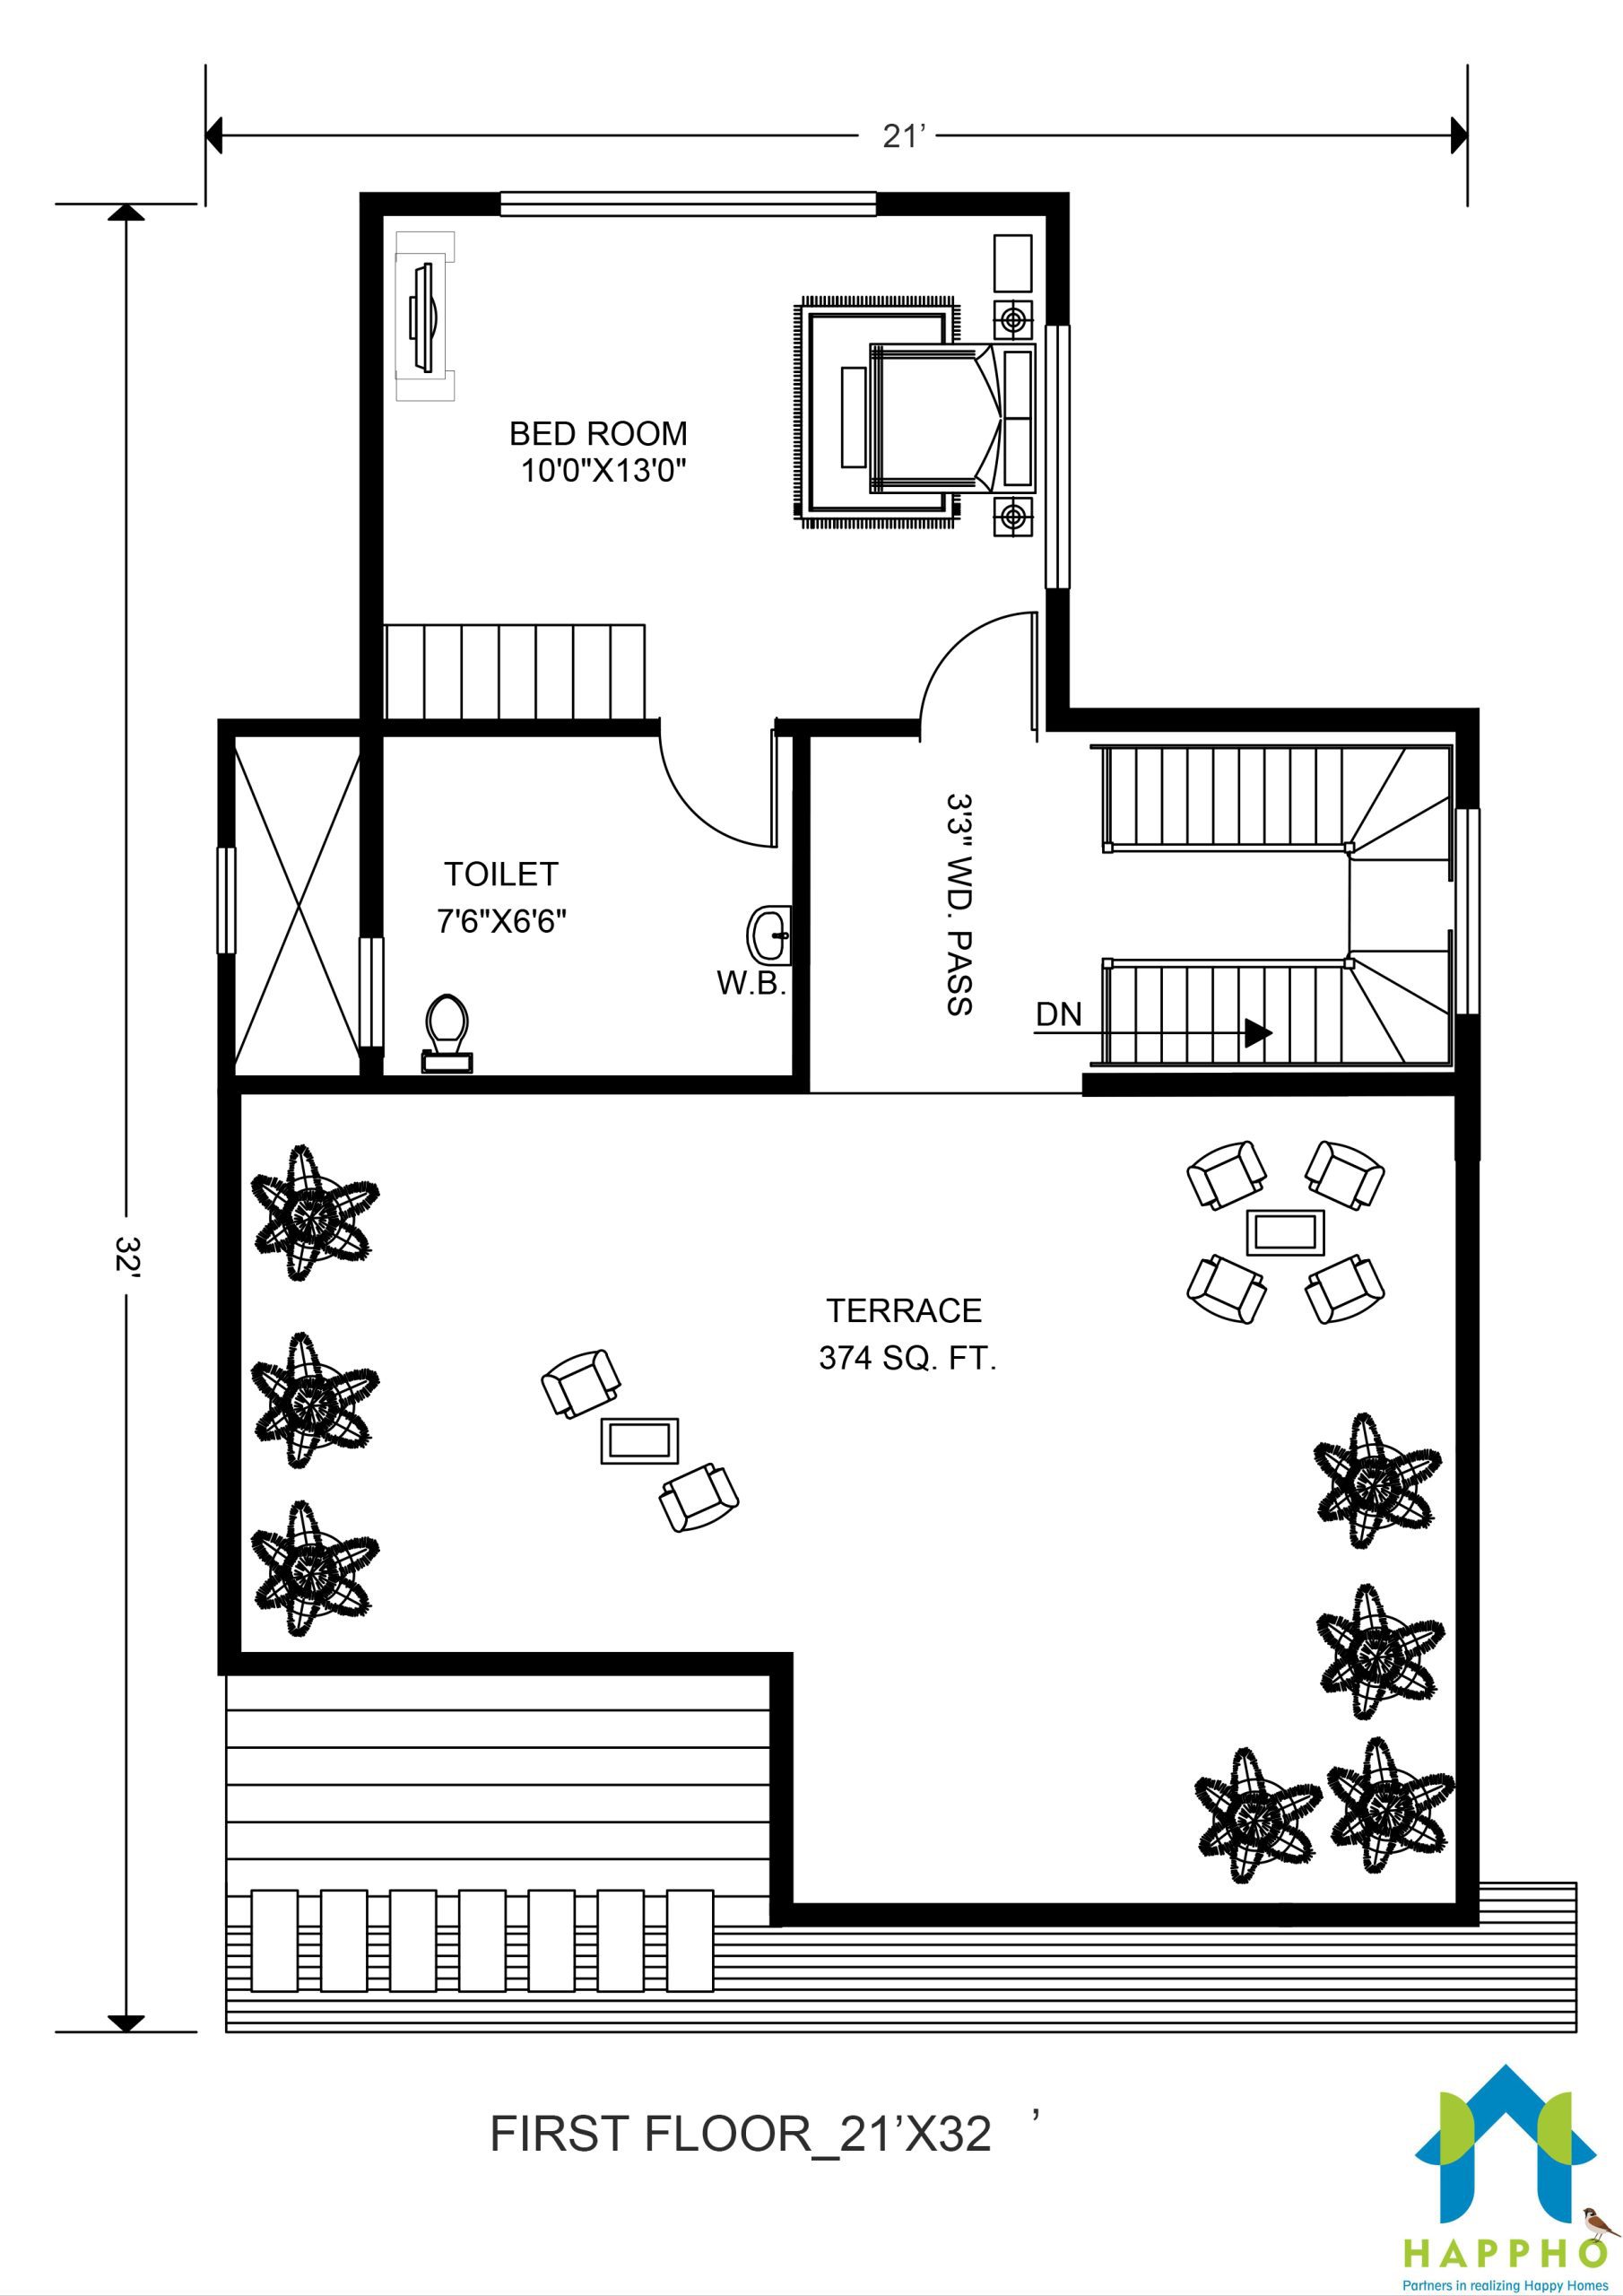 How to Read a House Floor Plans? - Happho